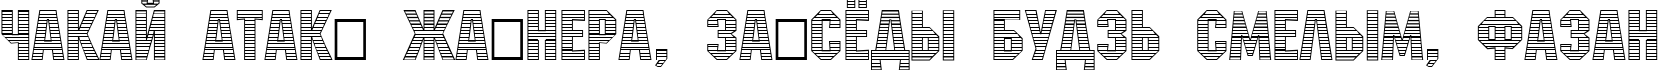 Пример написания шрифтом a_MachinaNovaStrMini текста на белорусском